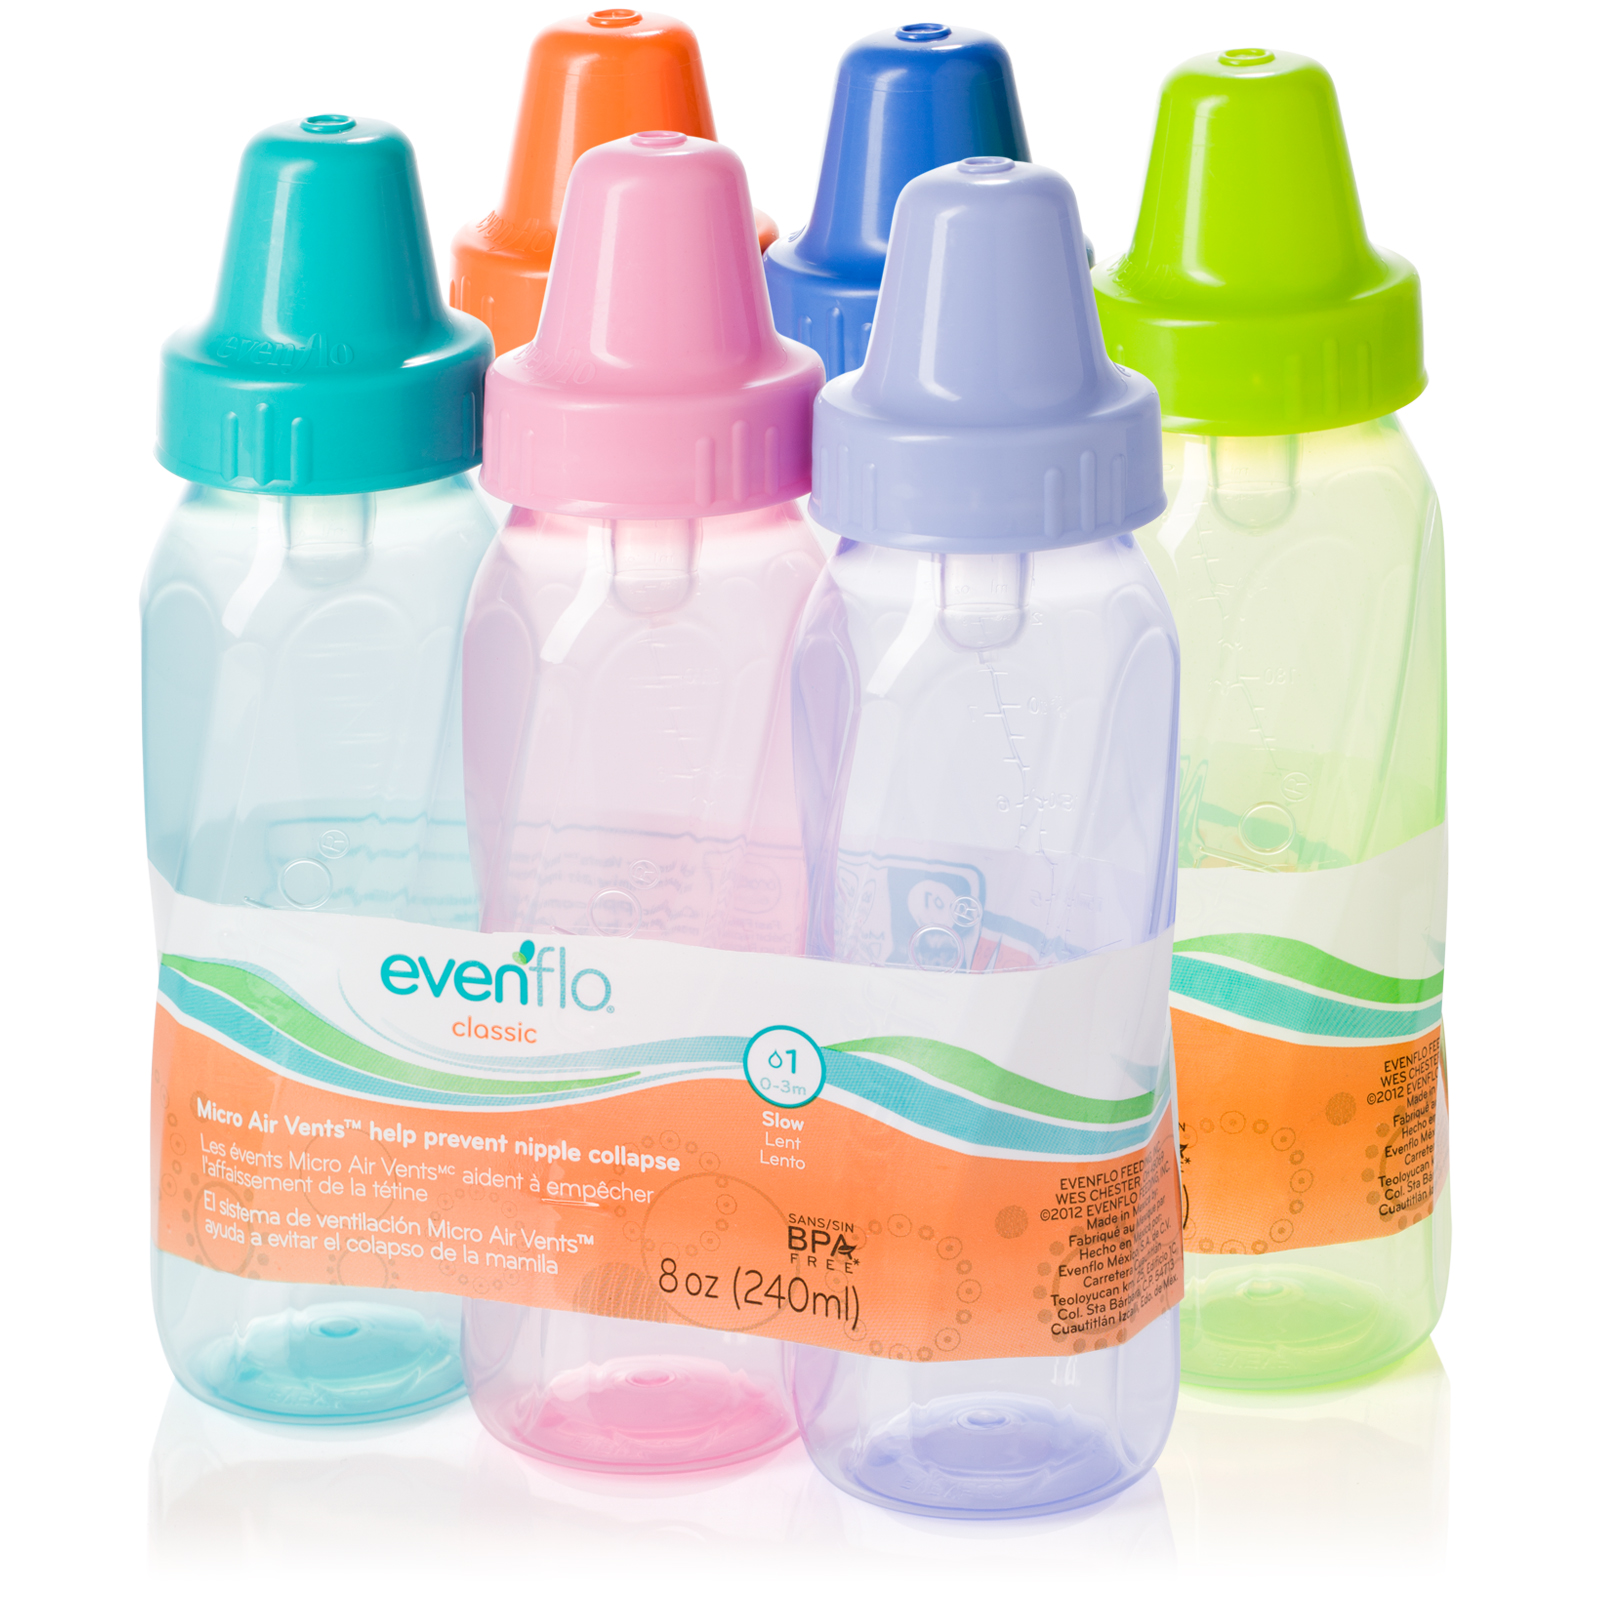 Medela 8 oz Breastmilk Bottle Set with Six Medium-Flow Wide Base Nipples